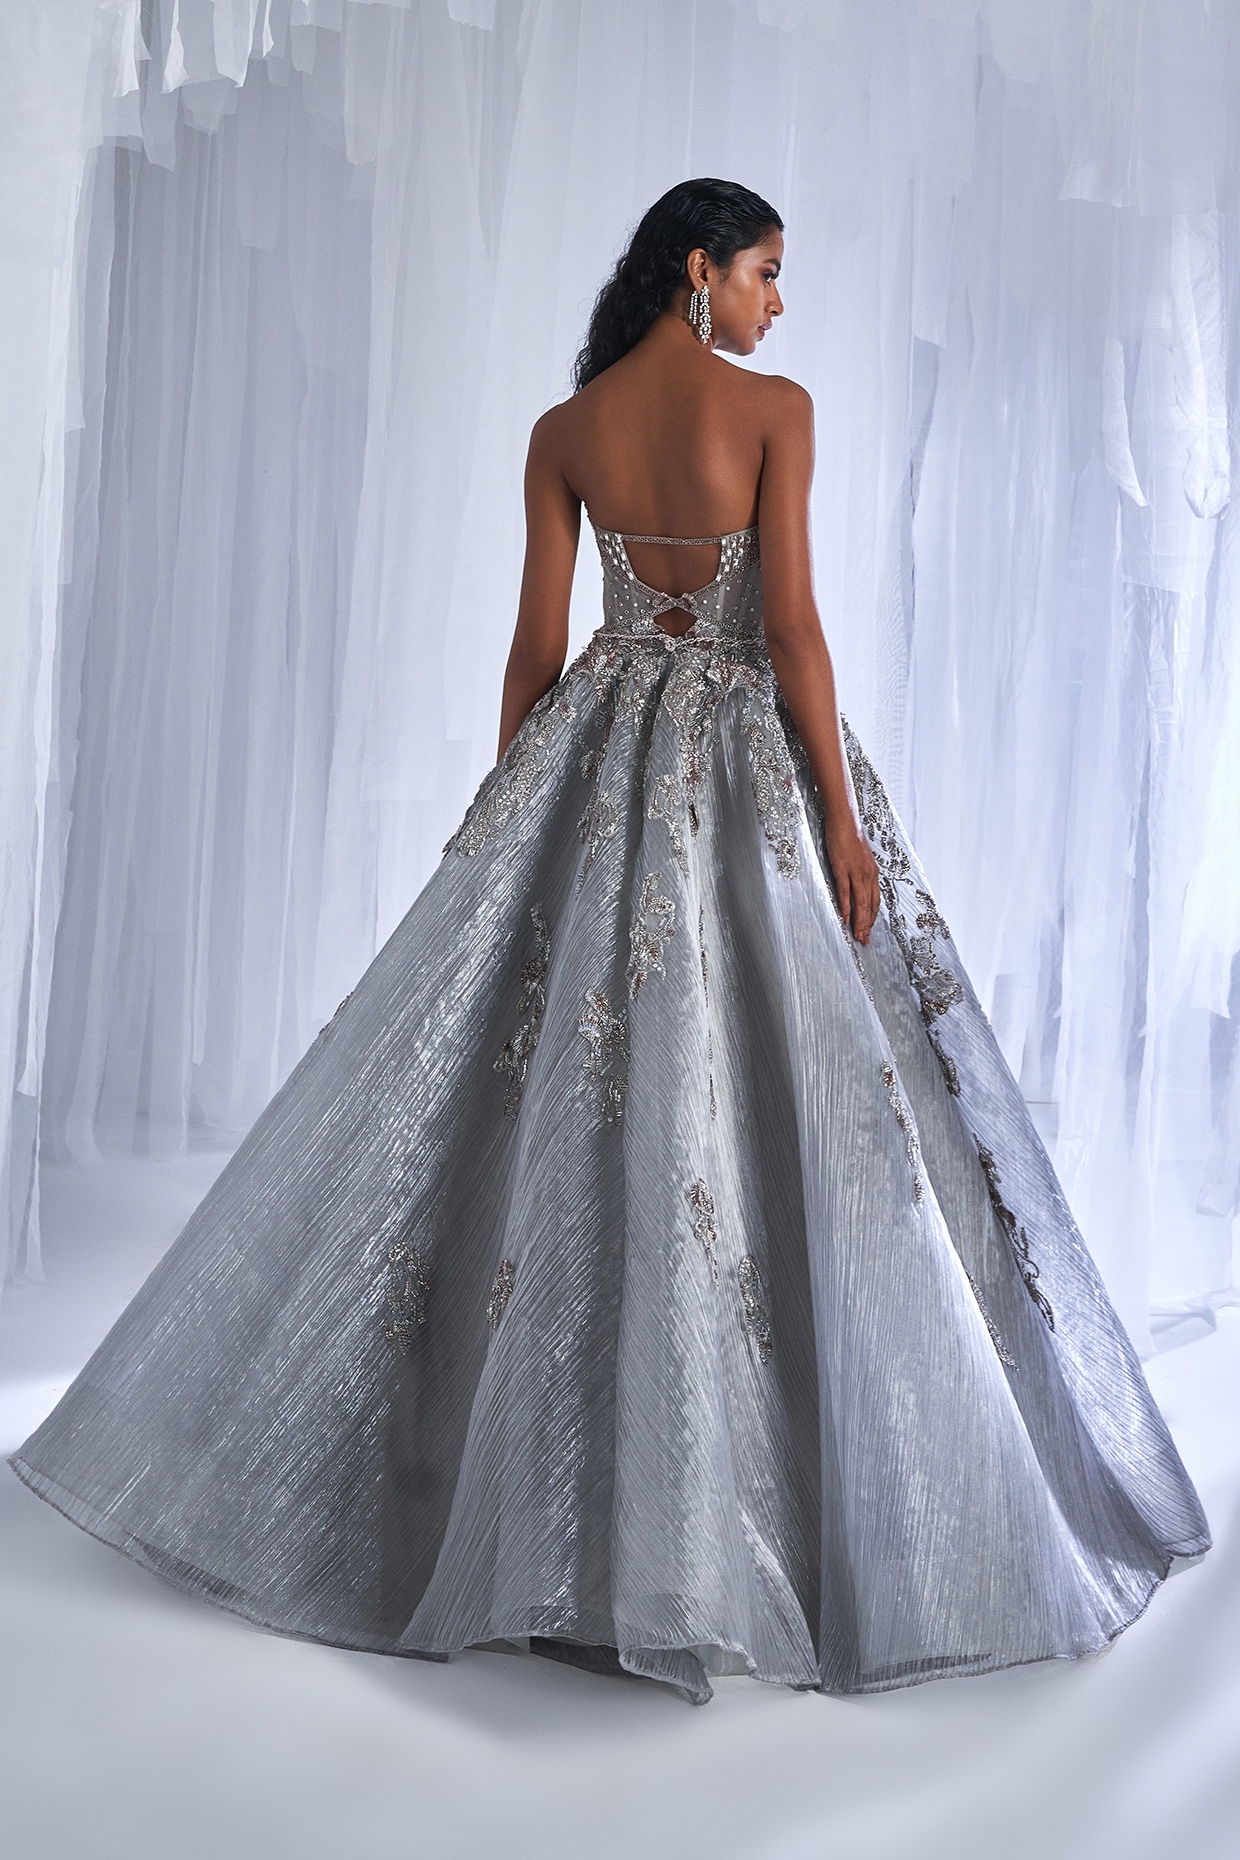 Silver Glaze by Chotronette - Unique Dress Design - Made to Measure